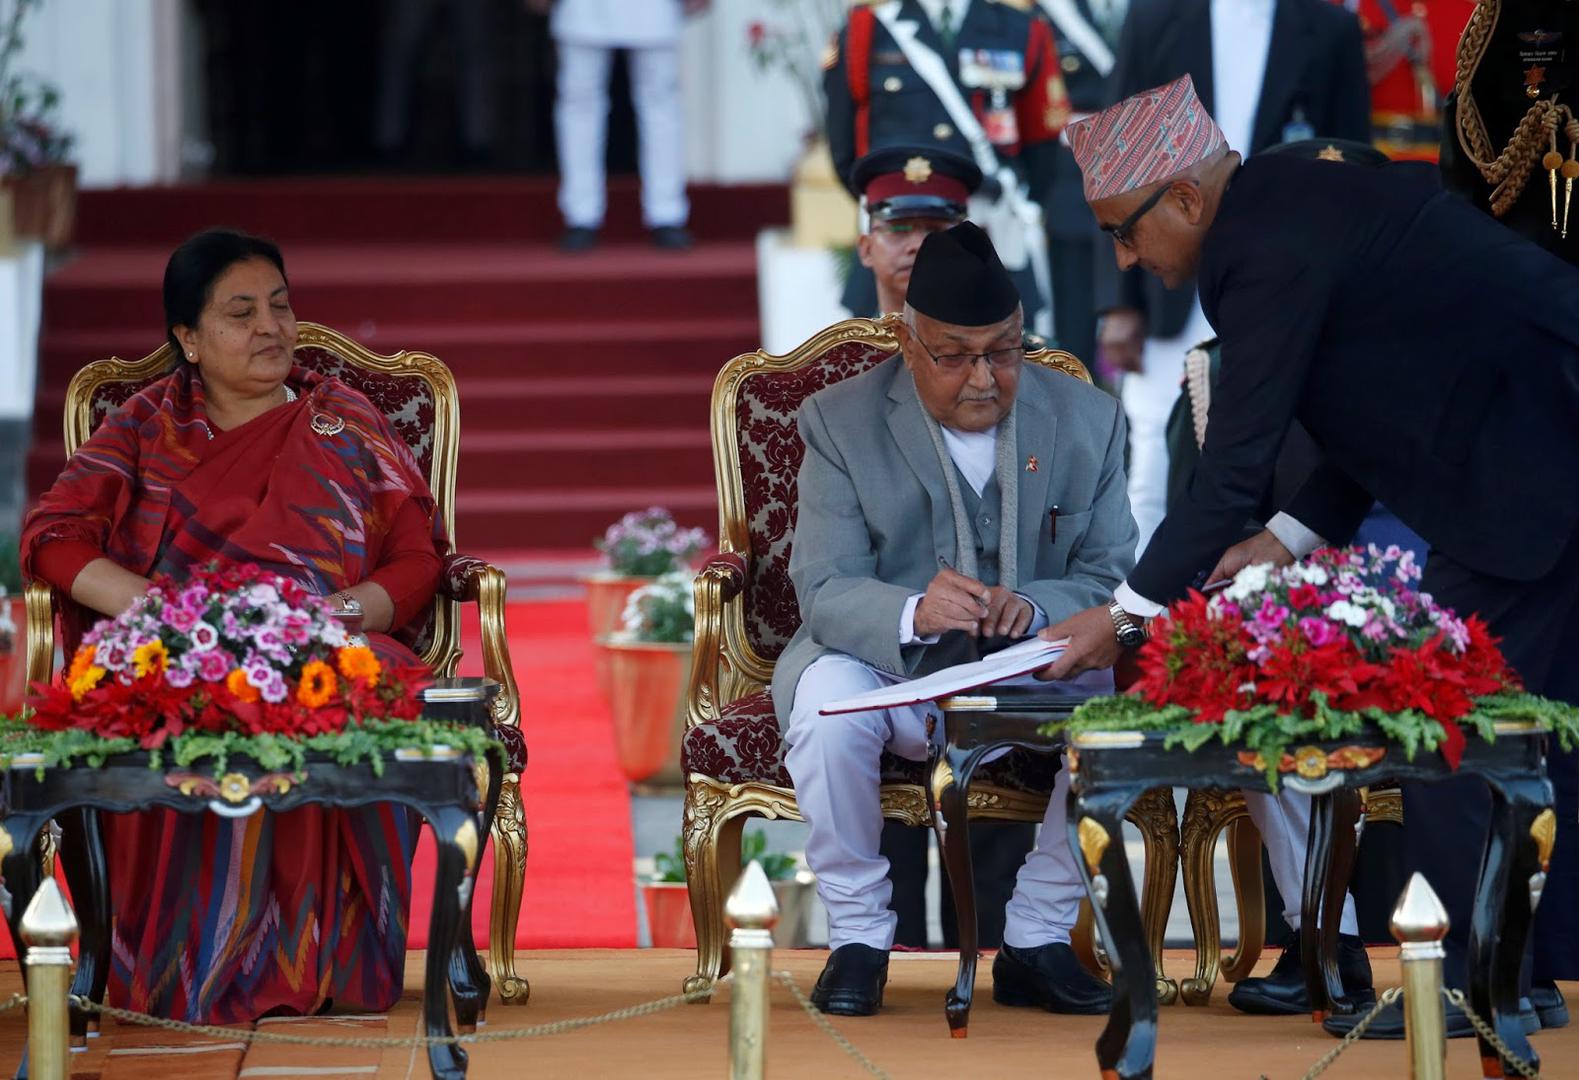 Nepal's Prime Minister Khadga Prasad Oli signs the oath of office papers next to President Bidhya Devi Bhandari in Kathmandu, Nepal, February 15, 2018.